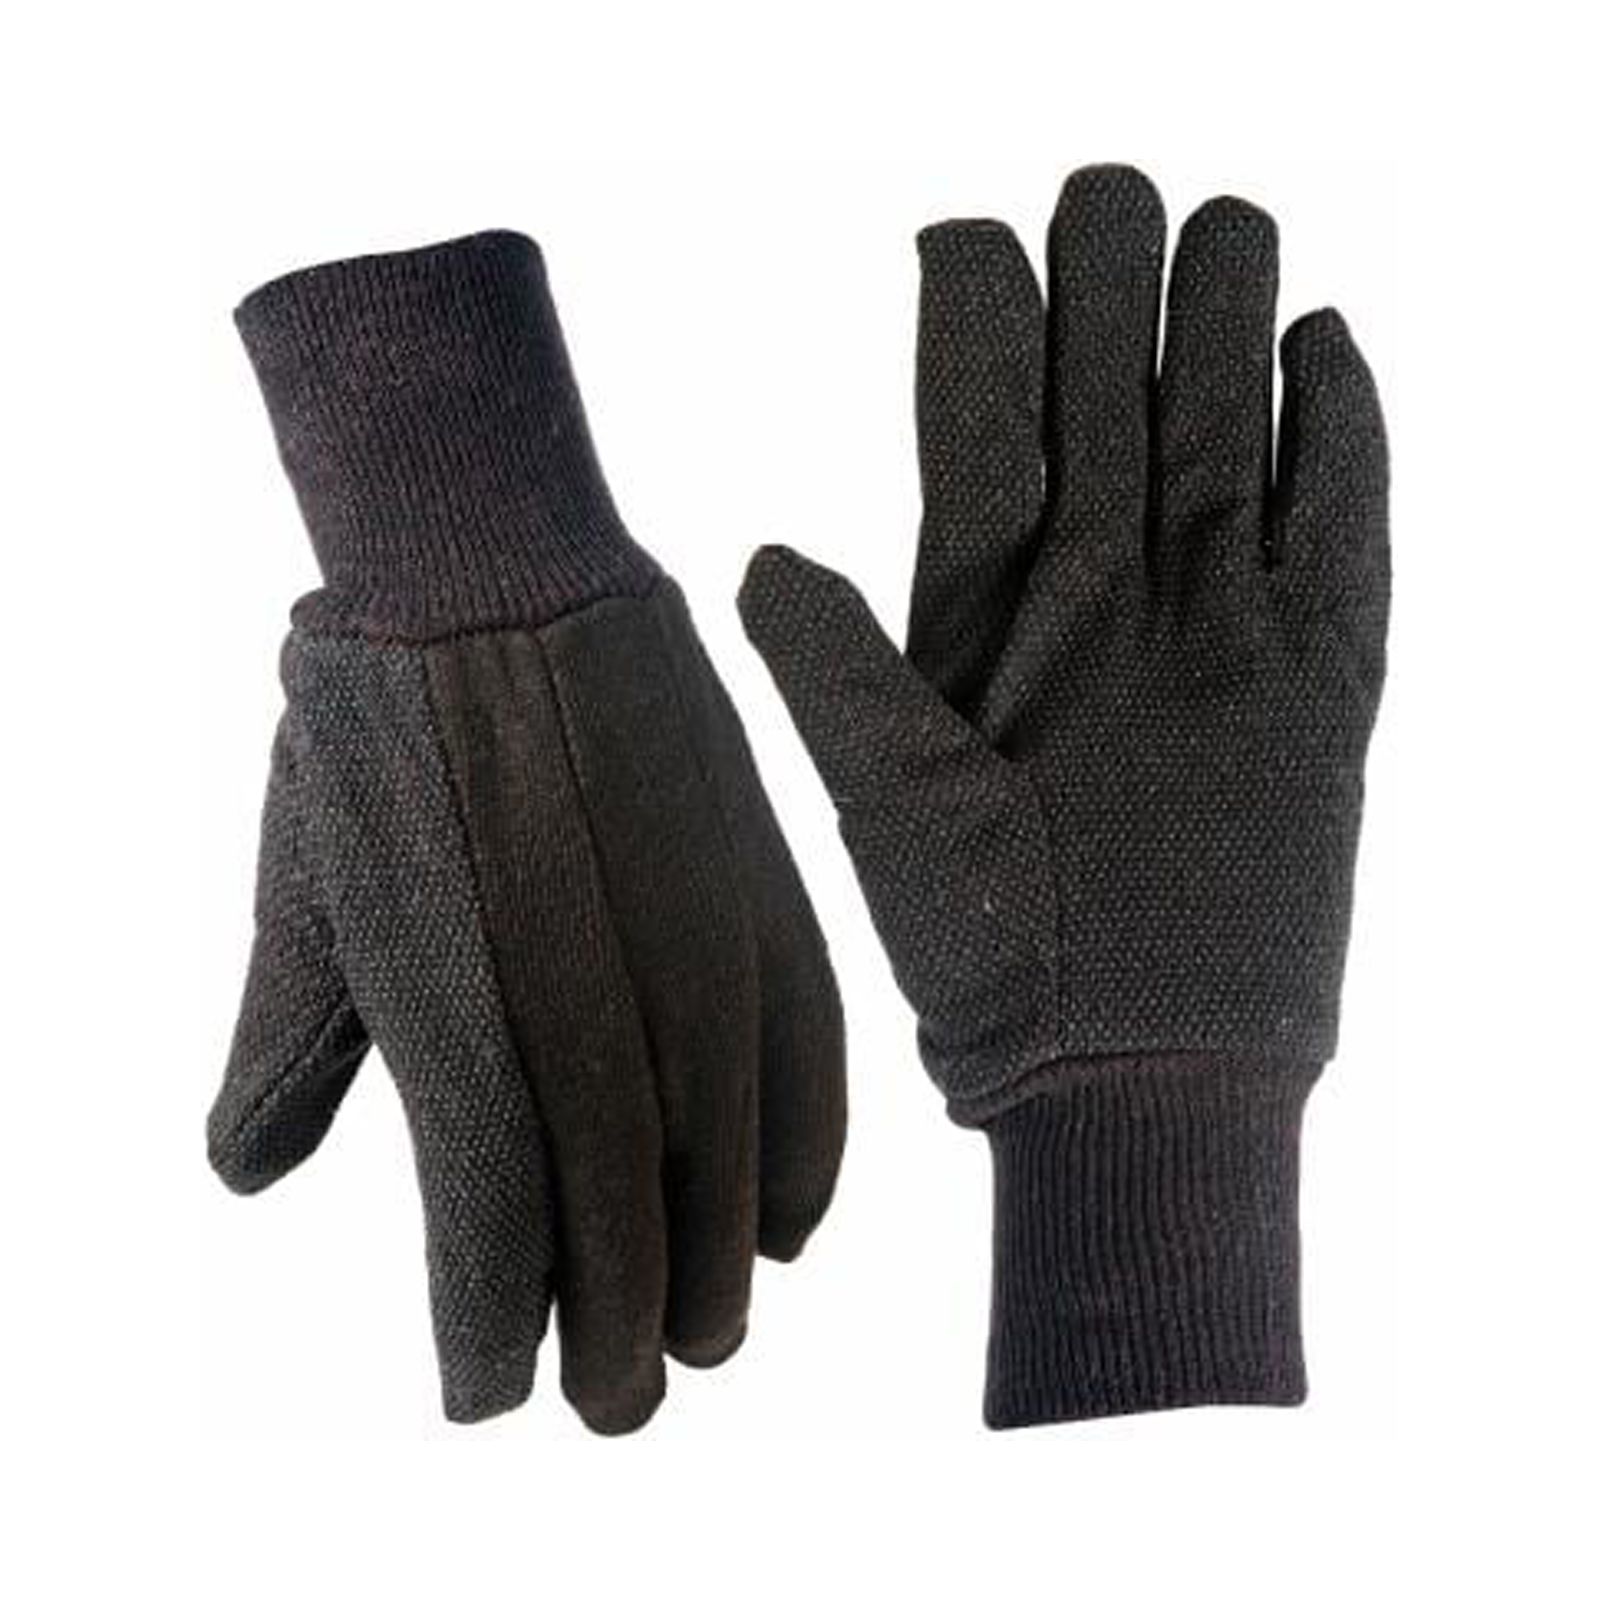 True Grip 9115-26 Men's Jersey Glove, Brown, Small - image 1 of 1